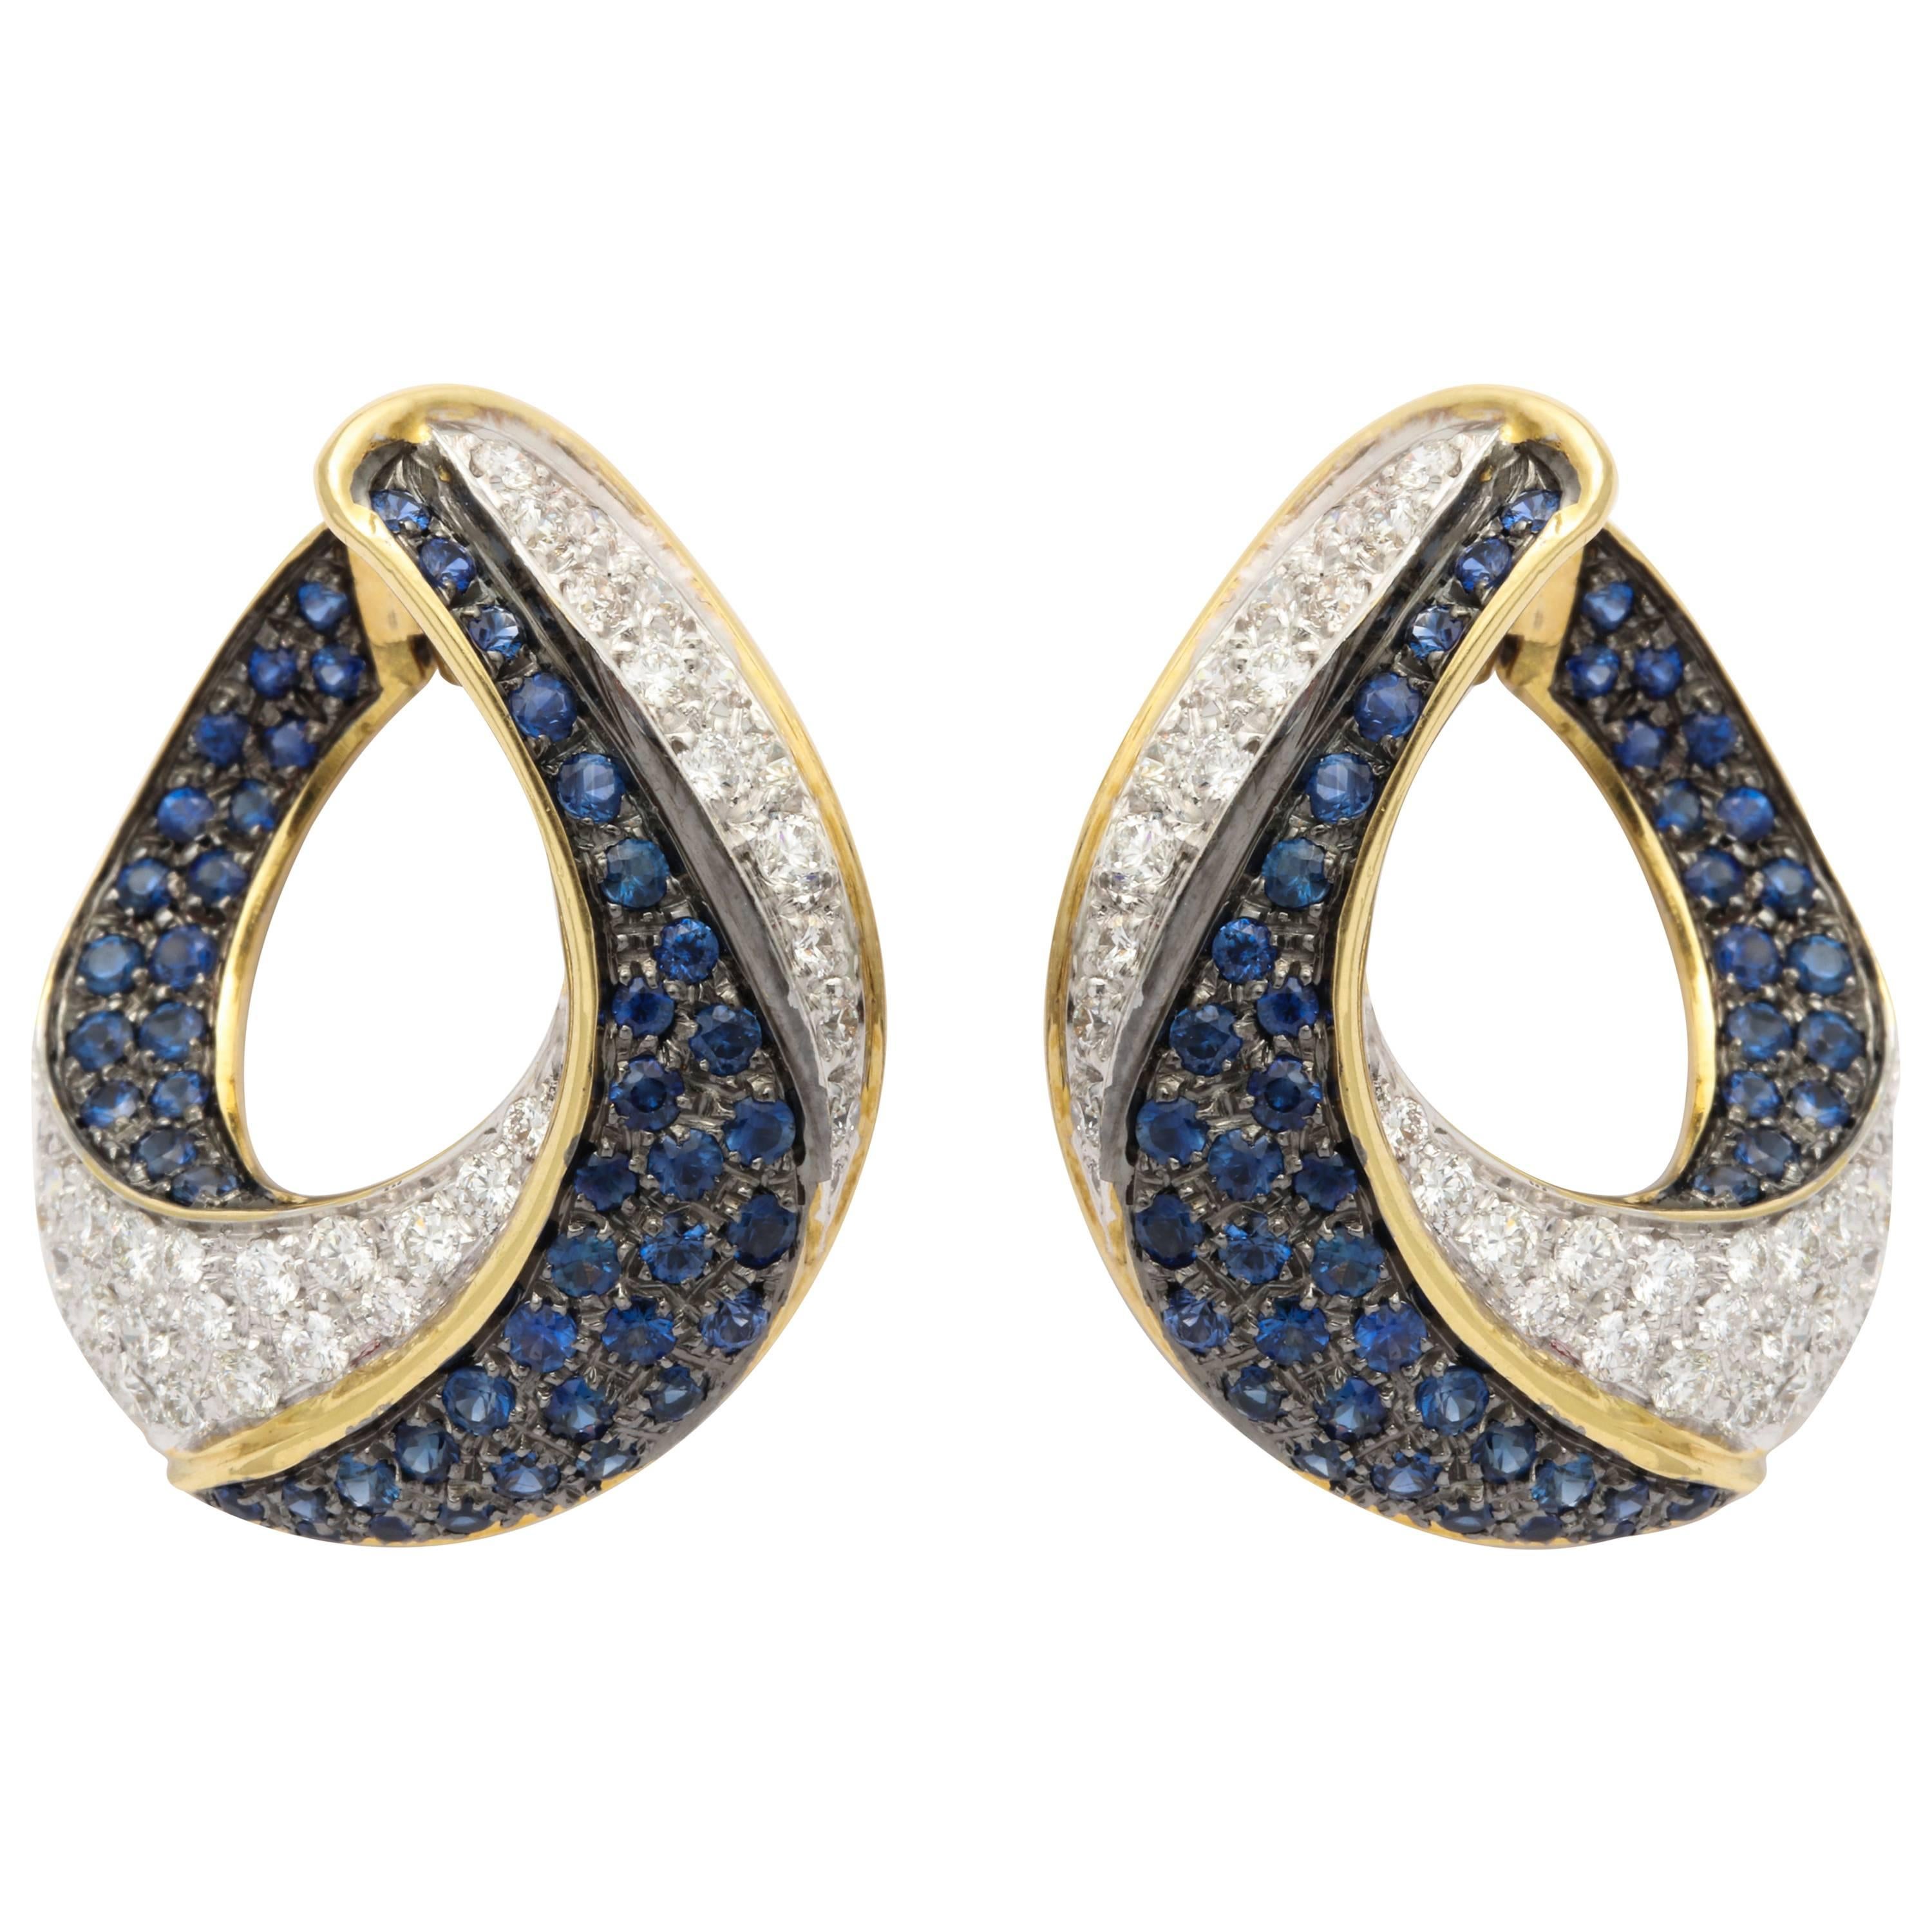 Stylish Italian Sapphire and Diamond Earrings